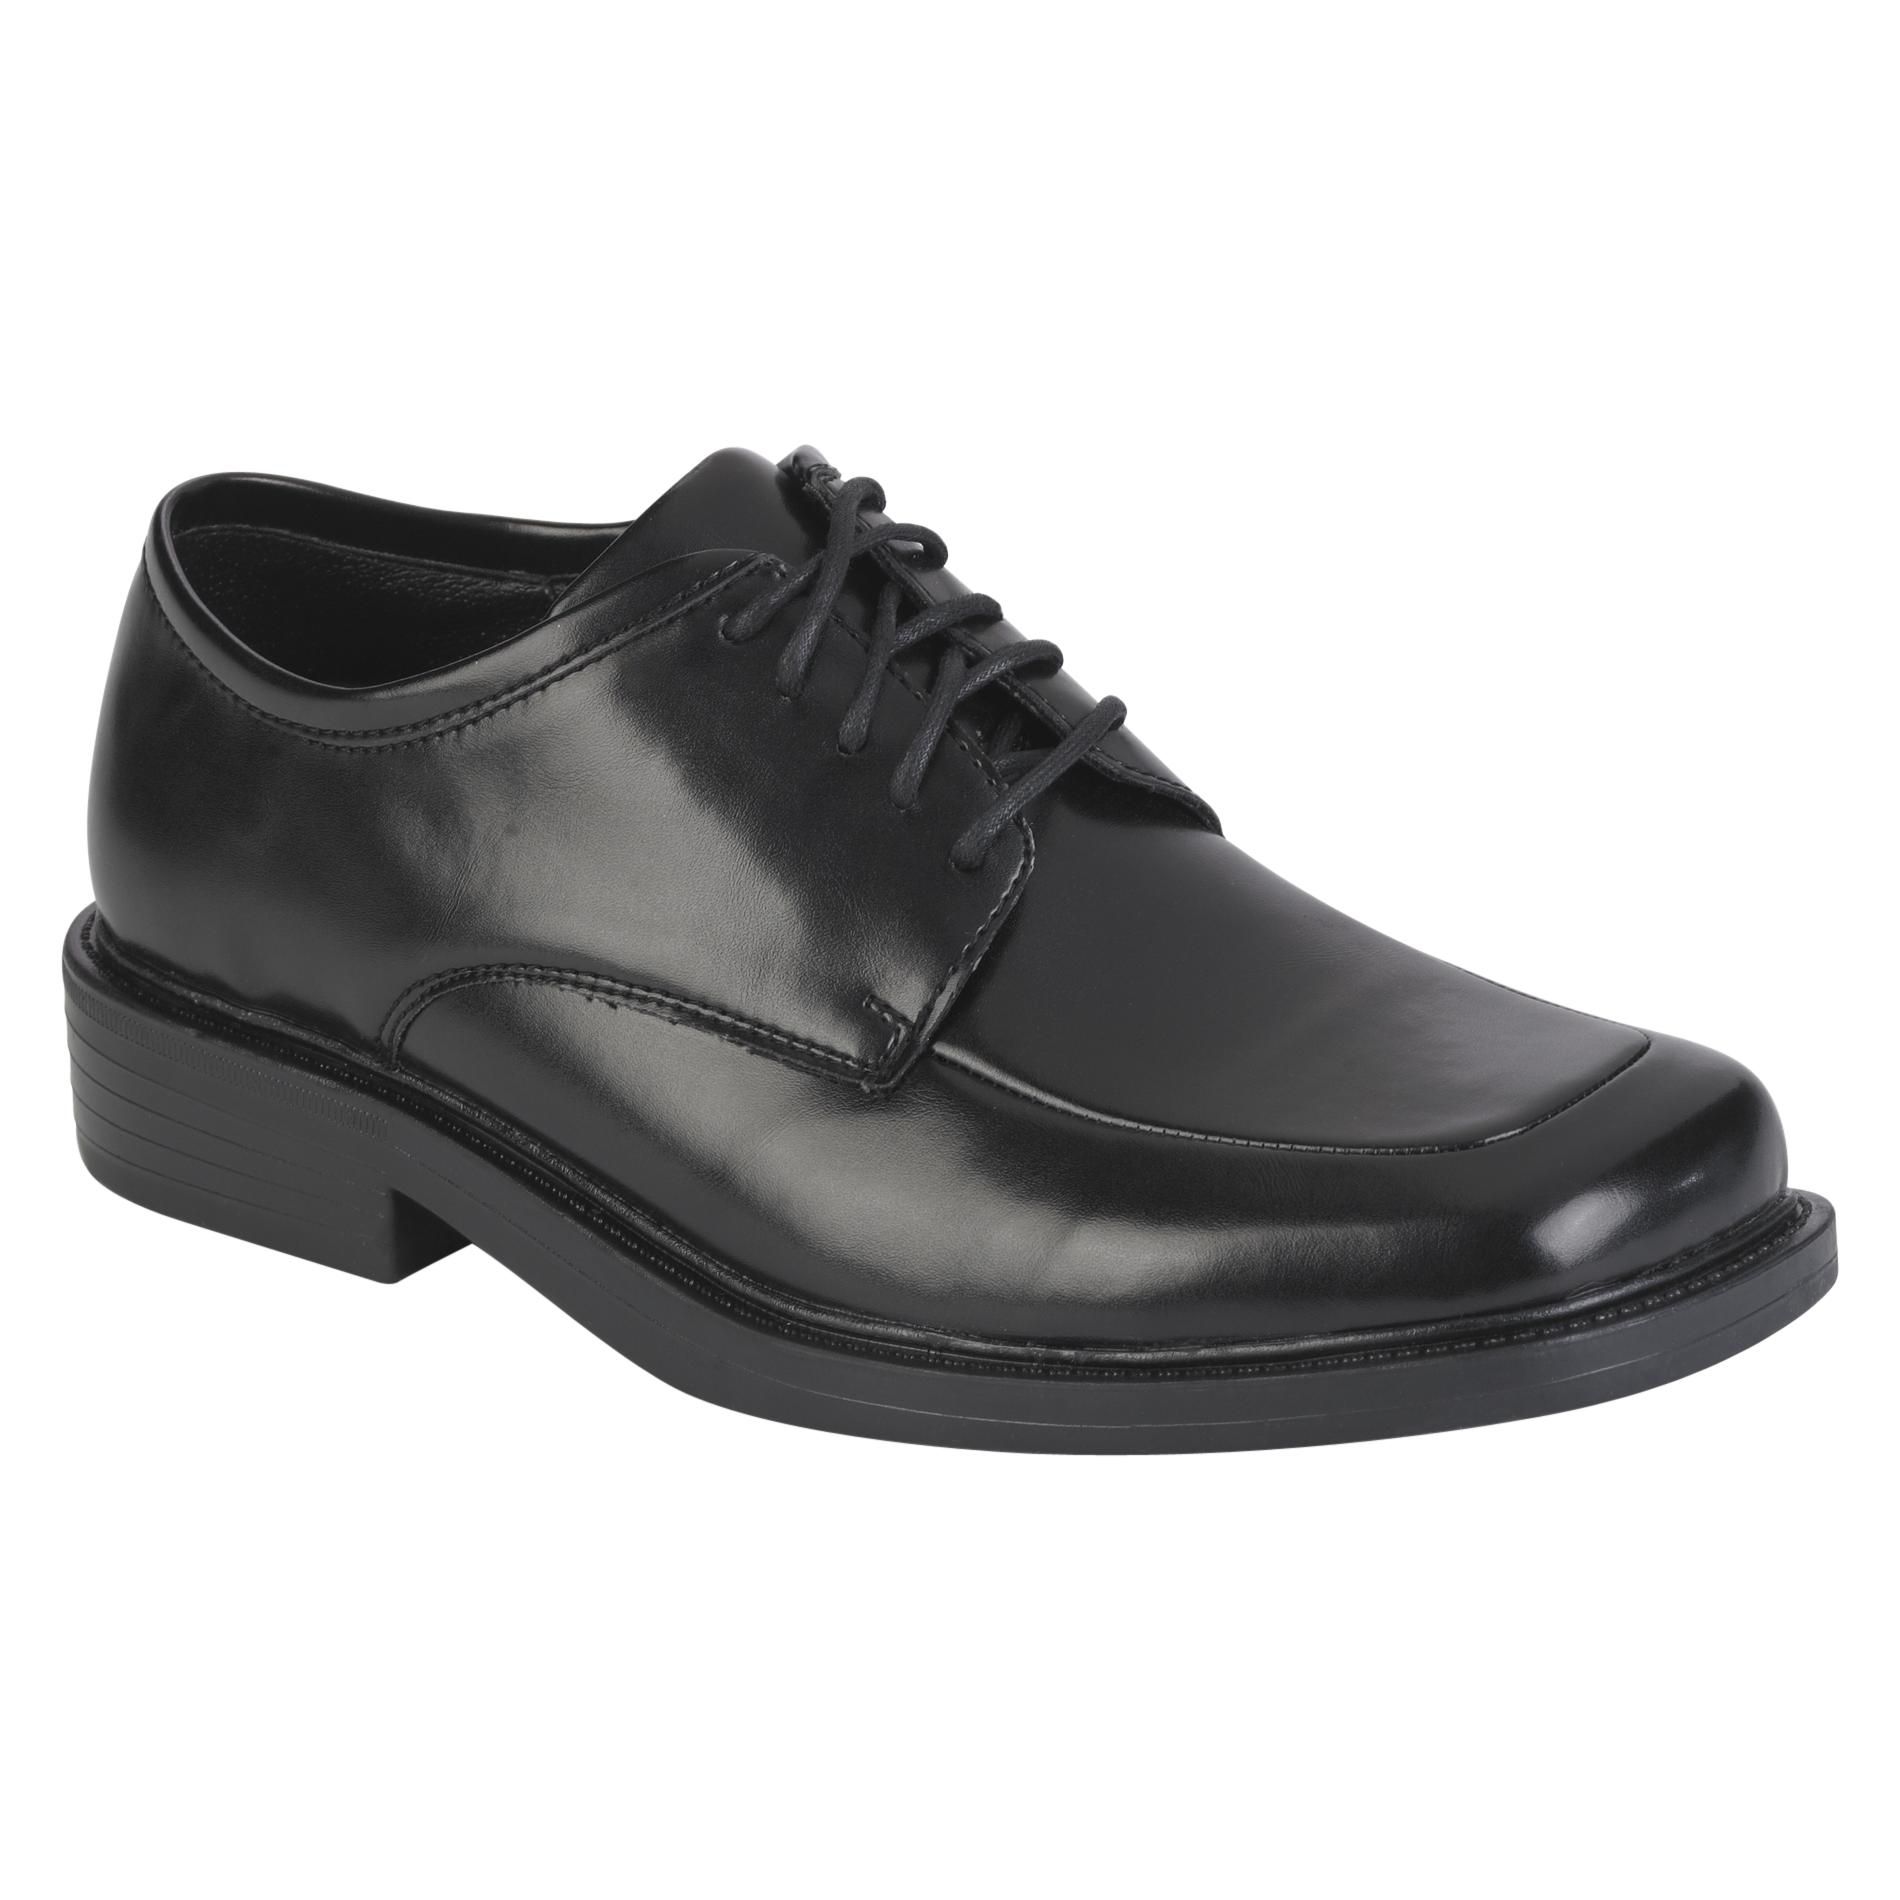 Soft Stags® Men's Manchester Lace-Up Dress Shoe - Wide Width - Black